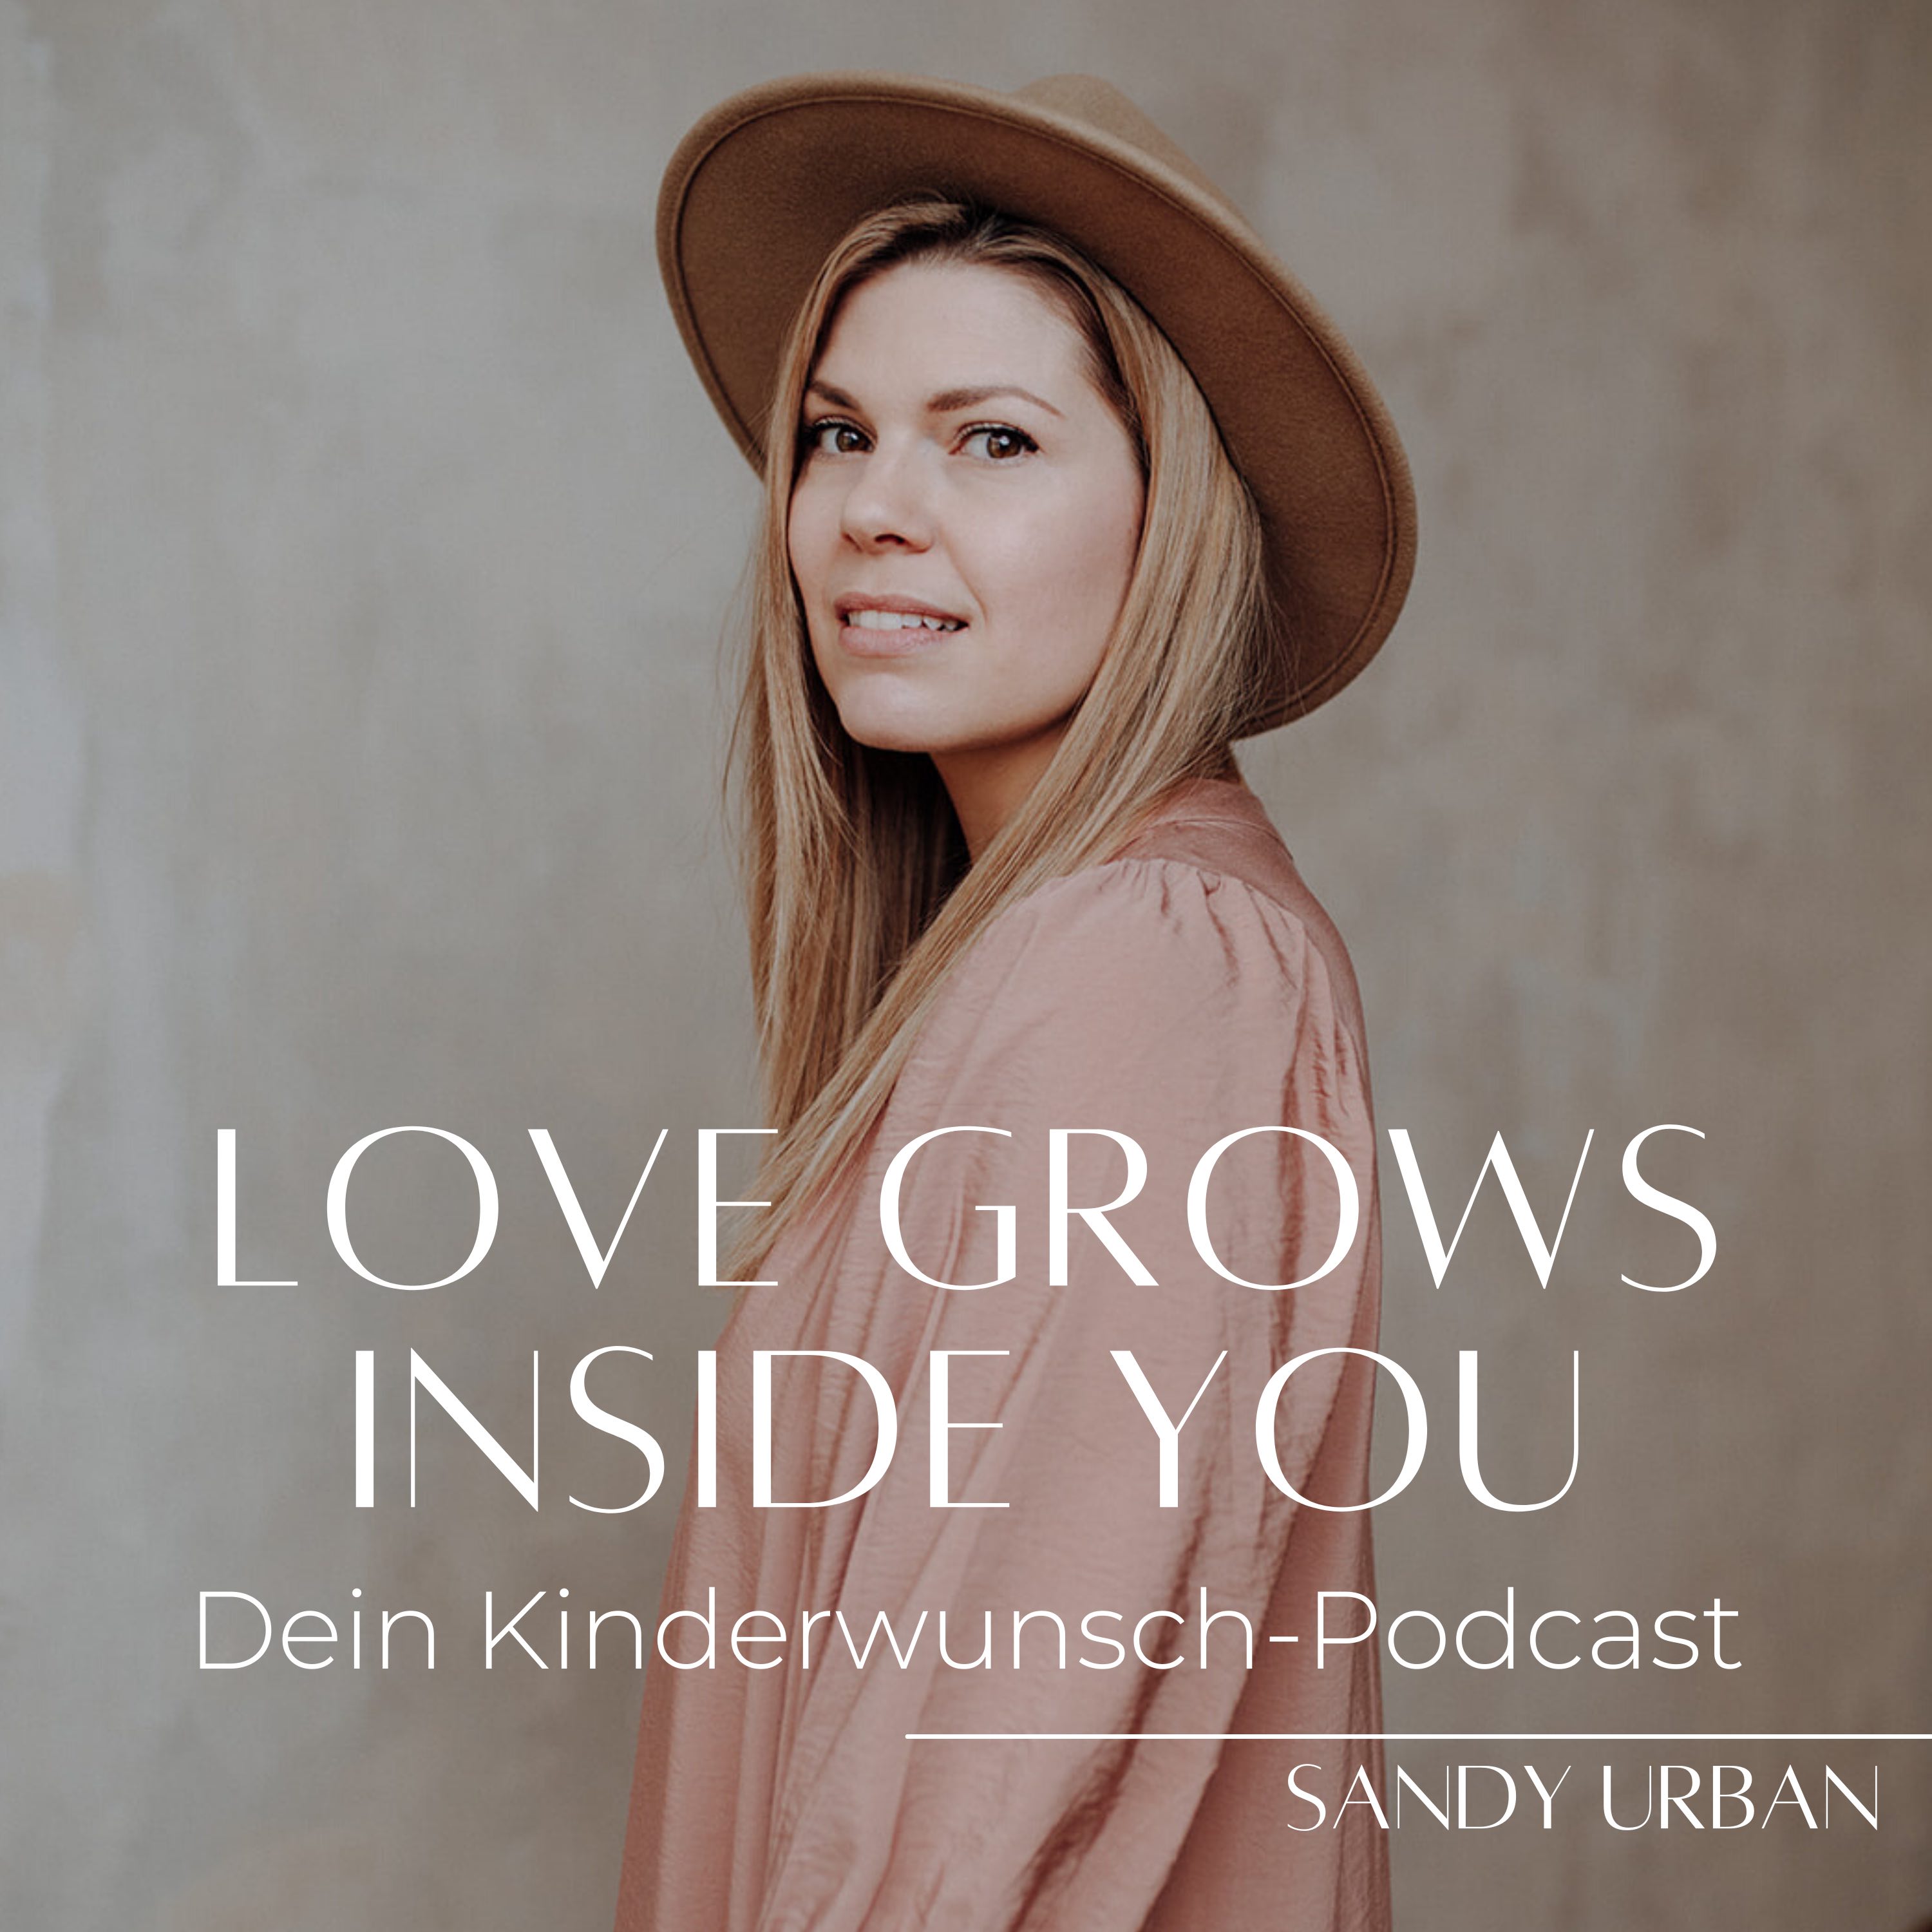 Love Grows Inside You - Dein Podcast bei Kinderwunsch